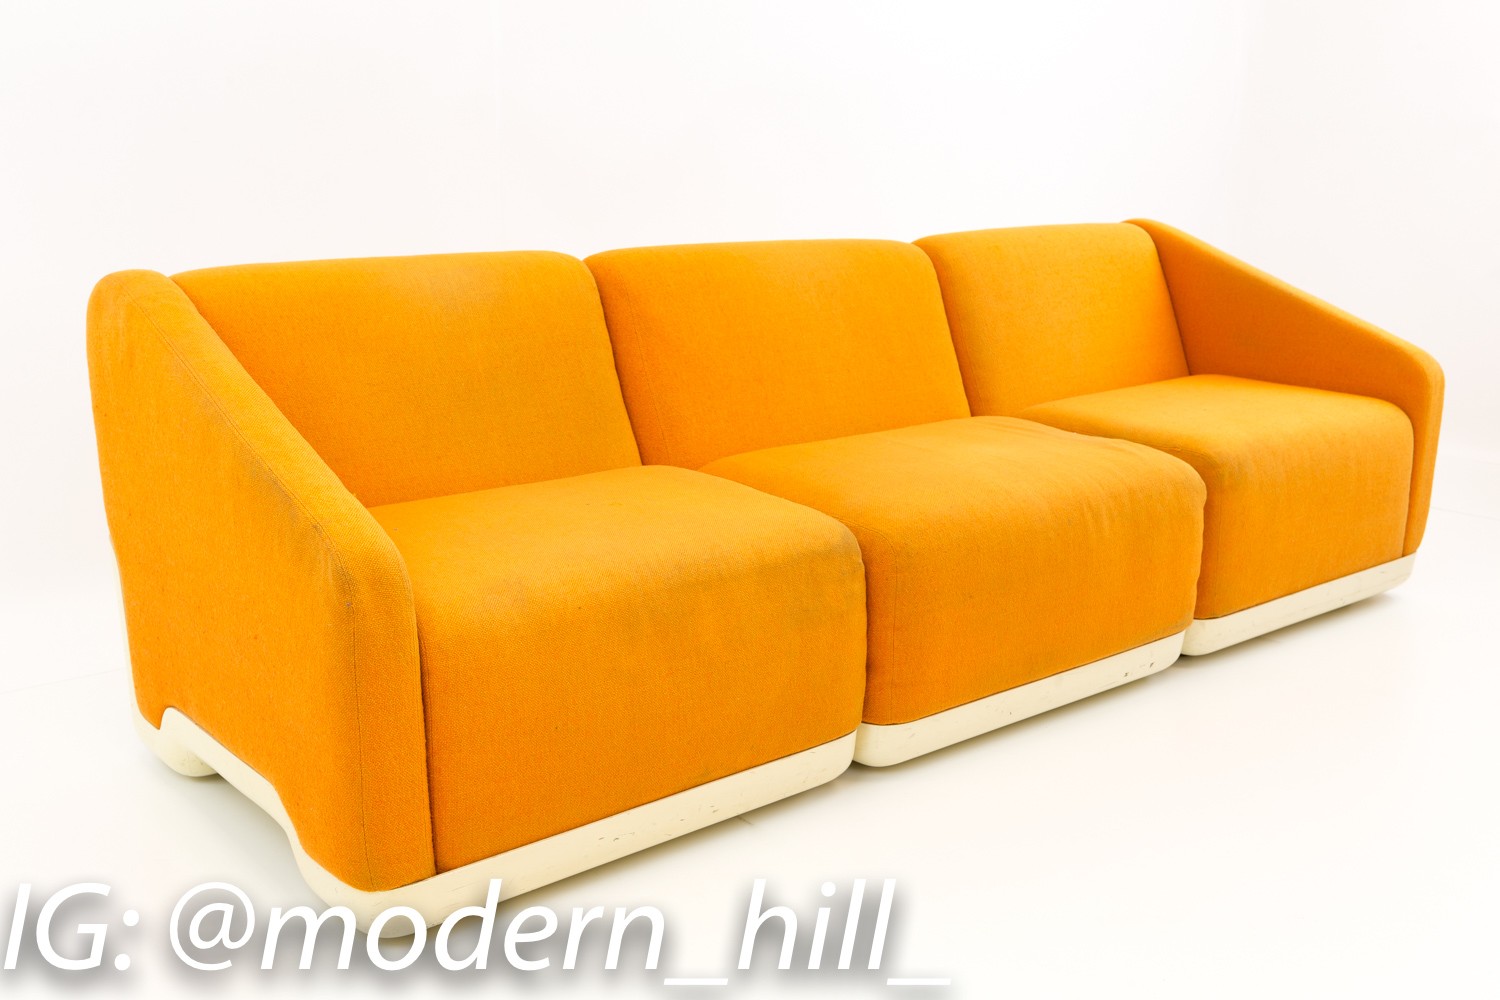 4 Piece Harvey Probber Fiberglass Convertible Sectional Sofa